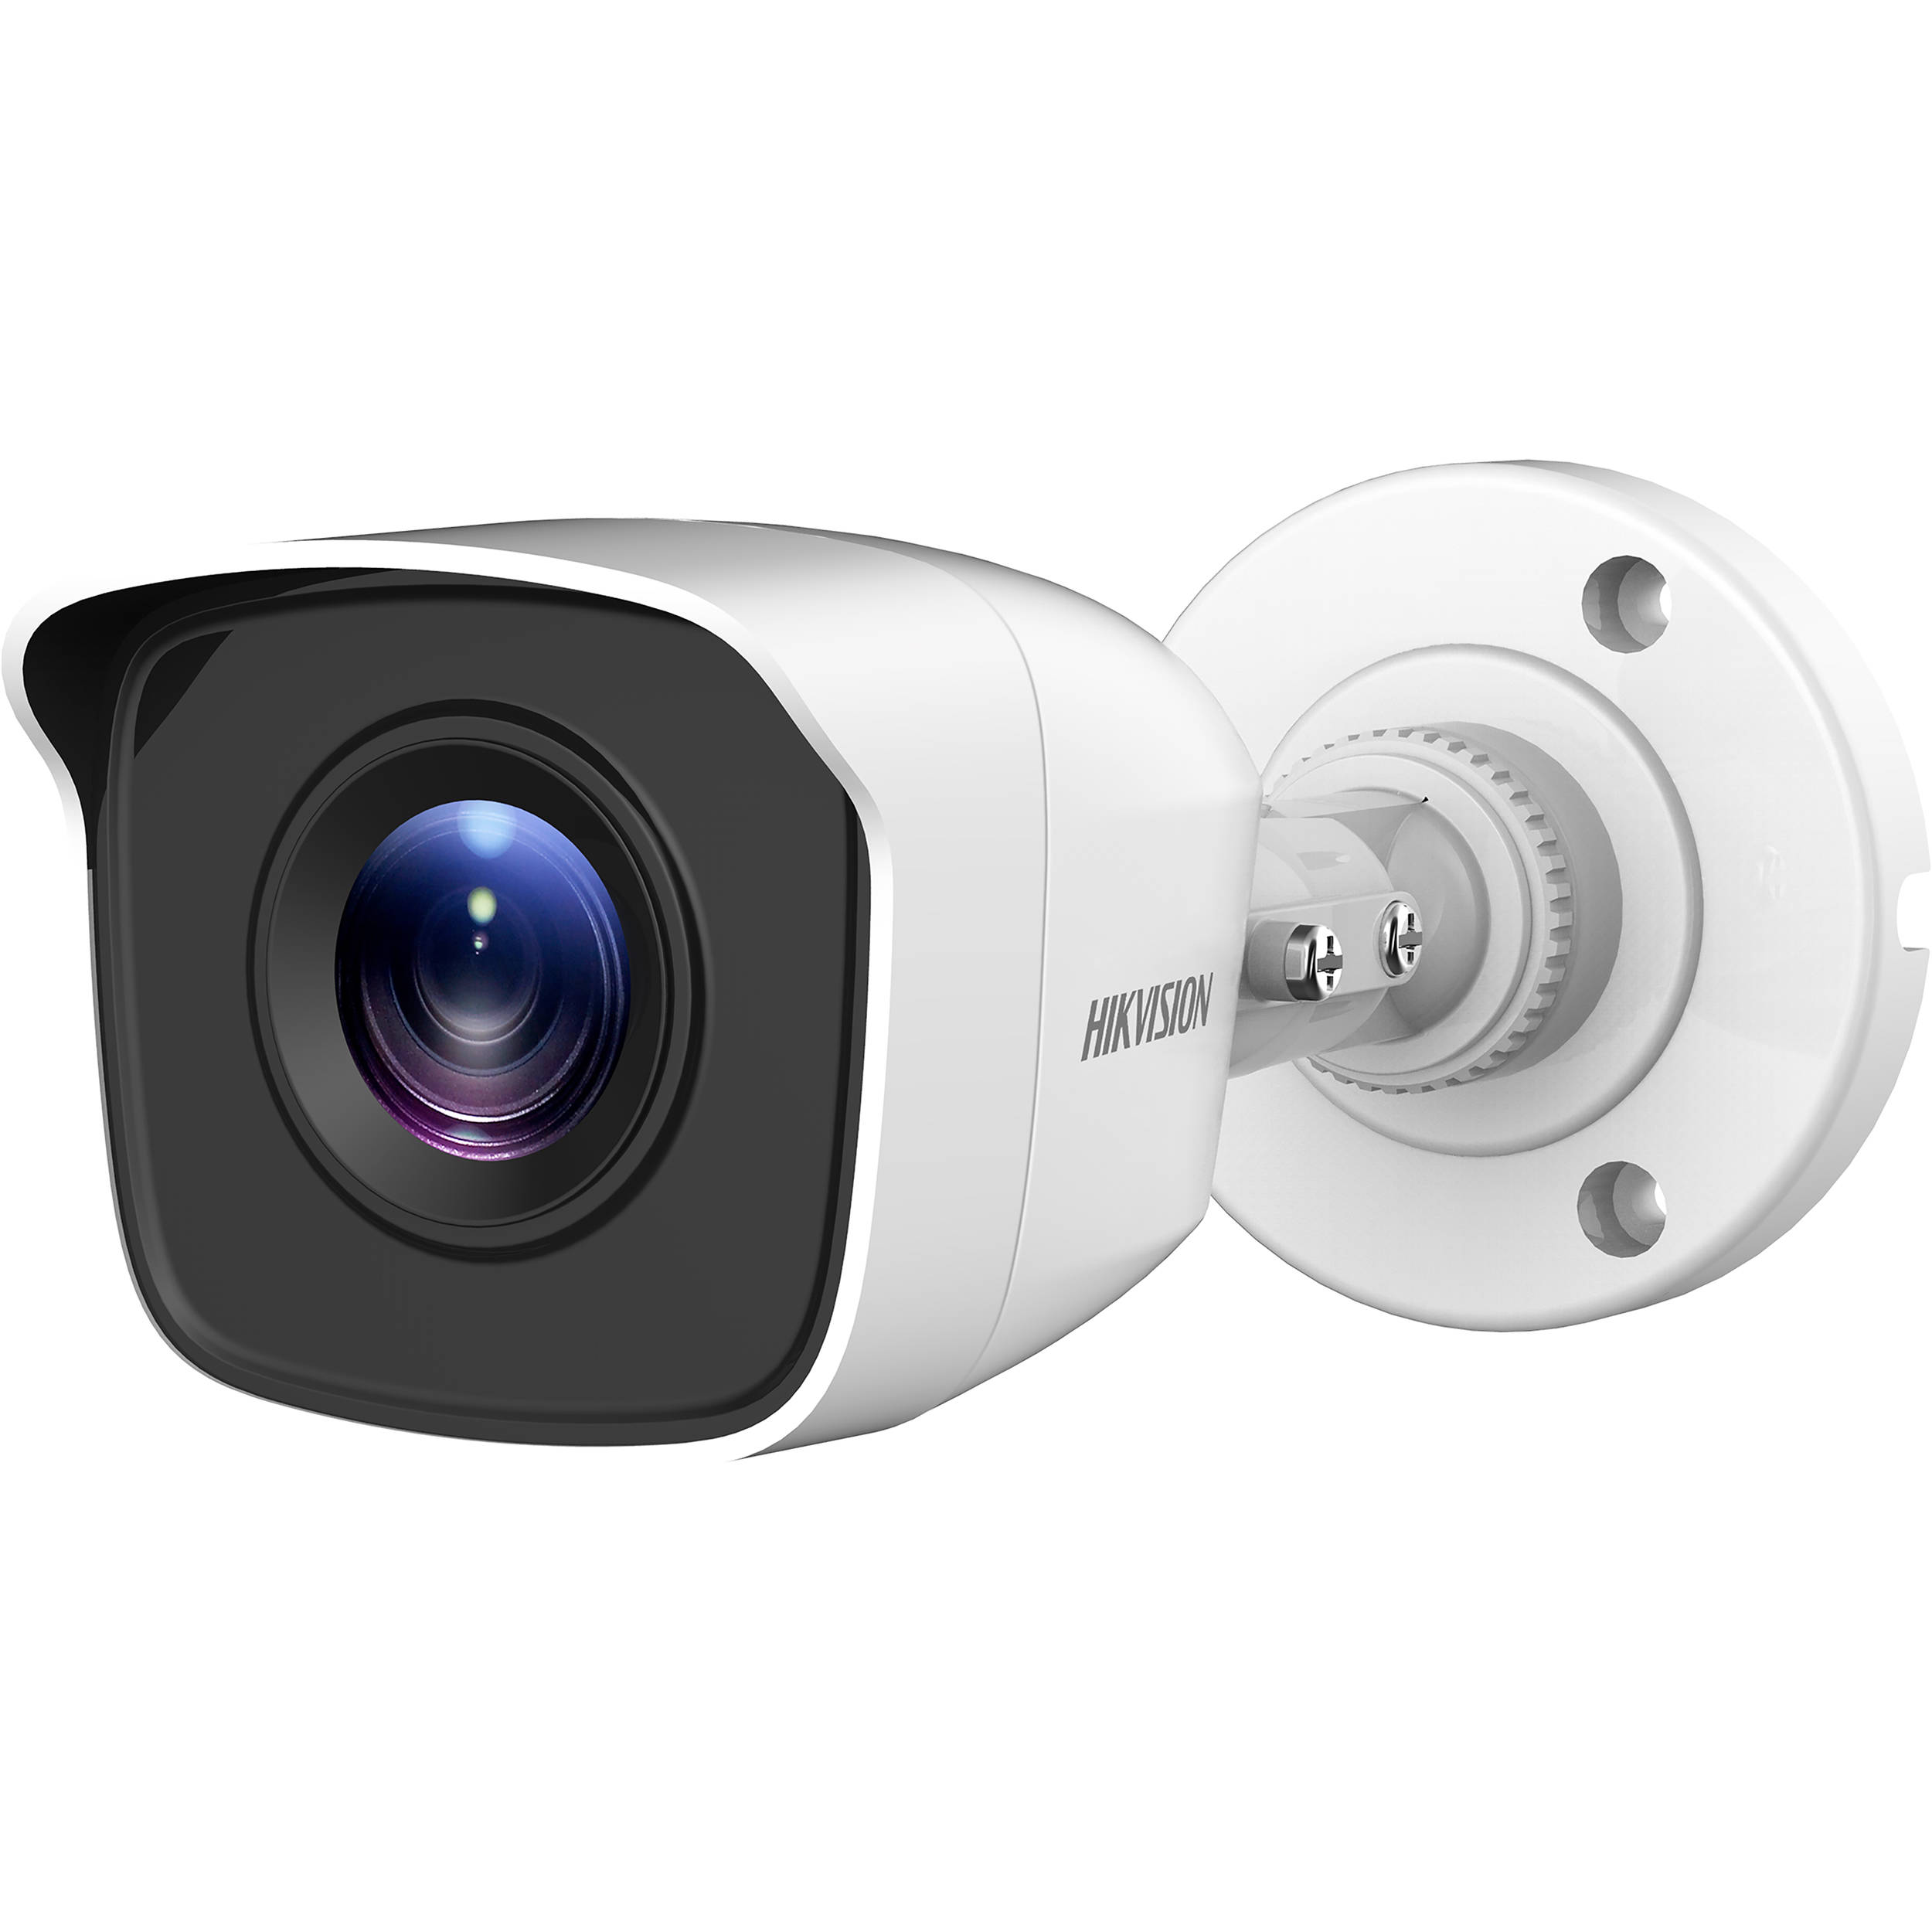 hikvision camera 3.6 mm